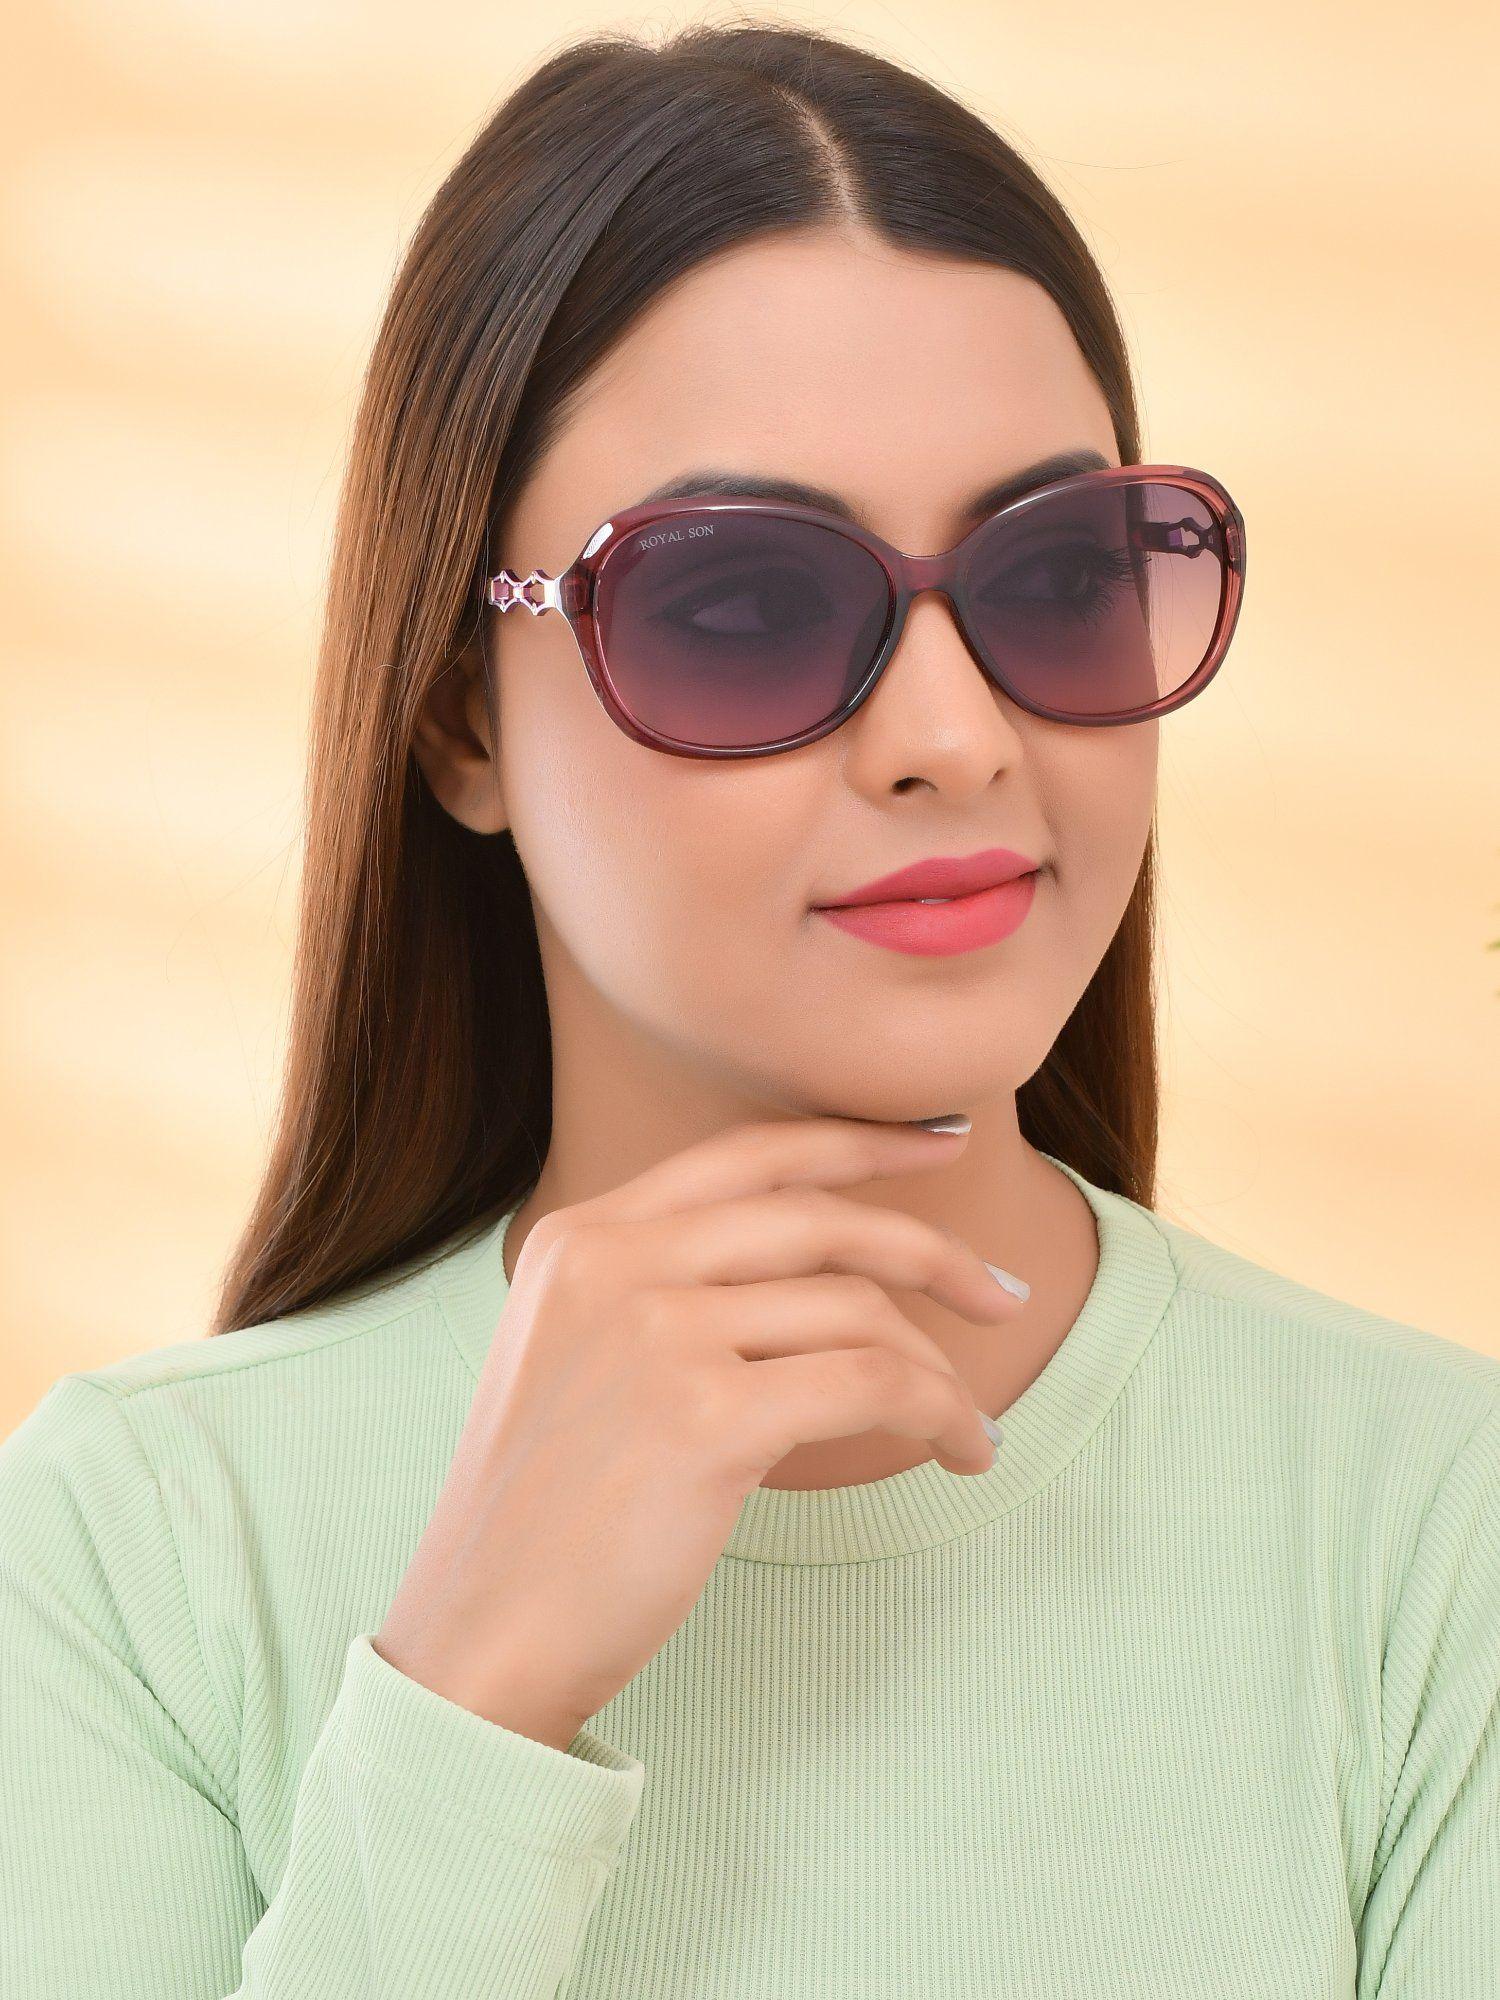 butterfly uv protection women sunglasses purple lens - chiwm00117-c4